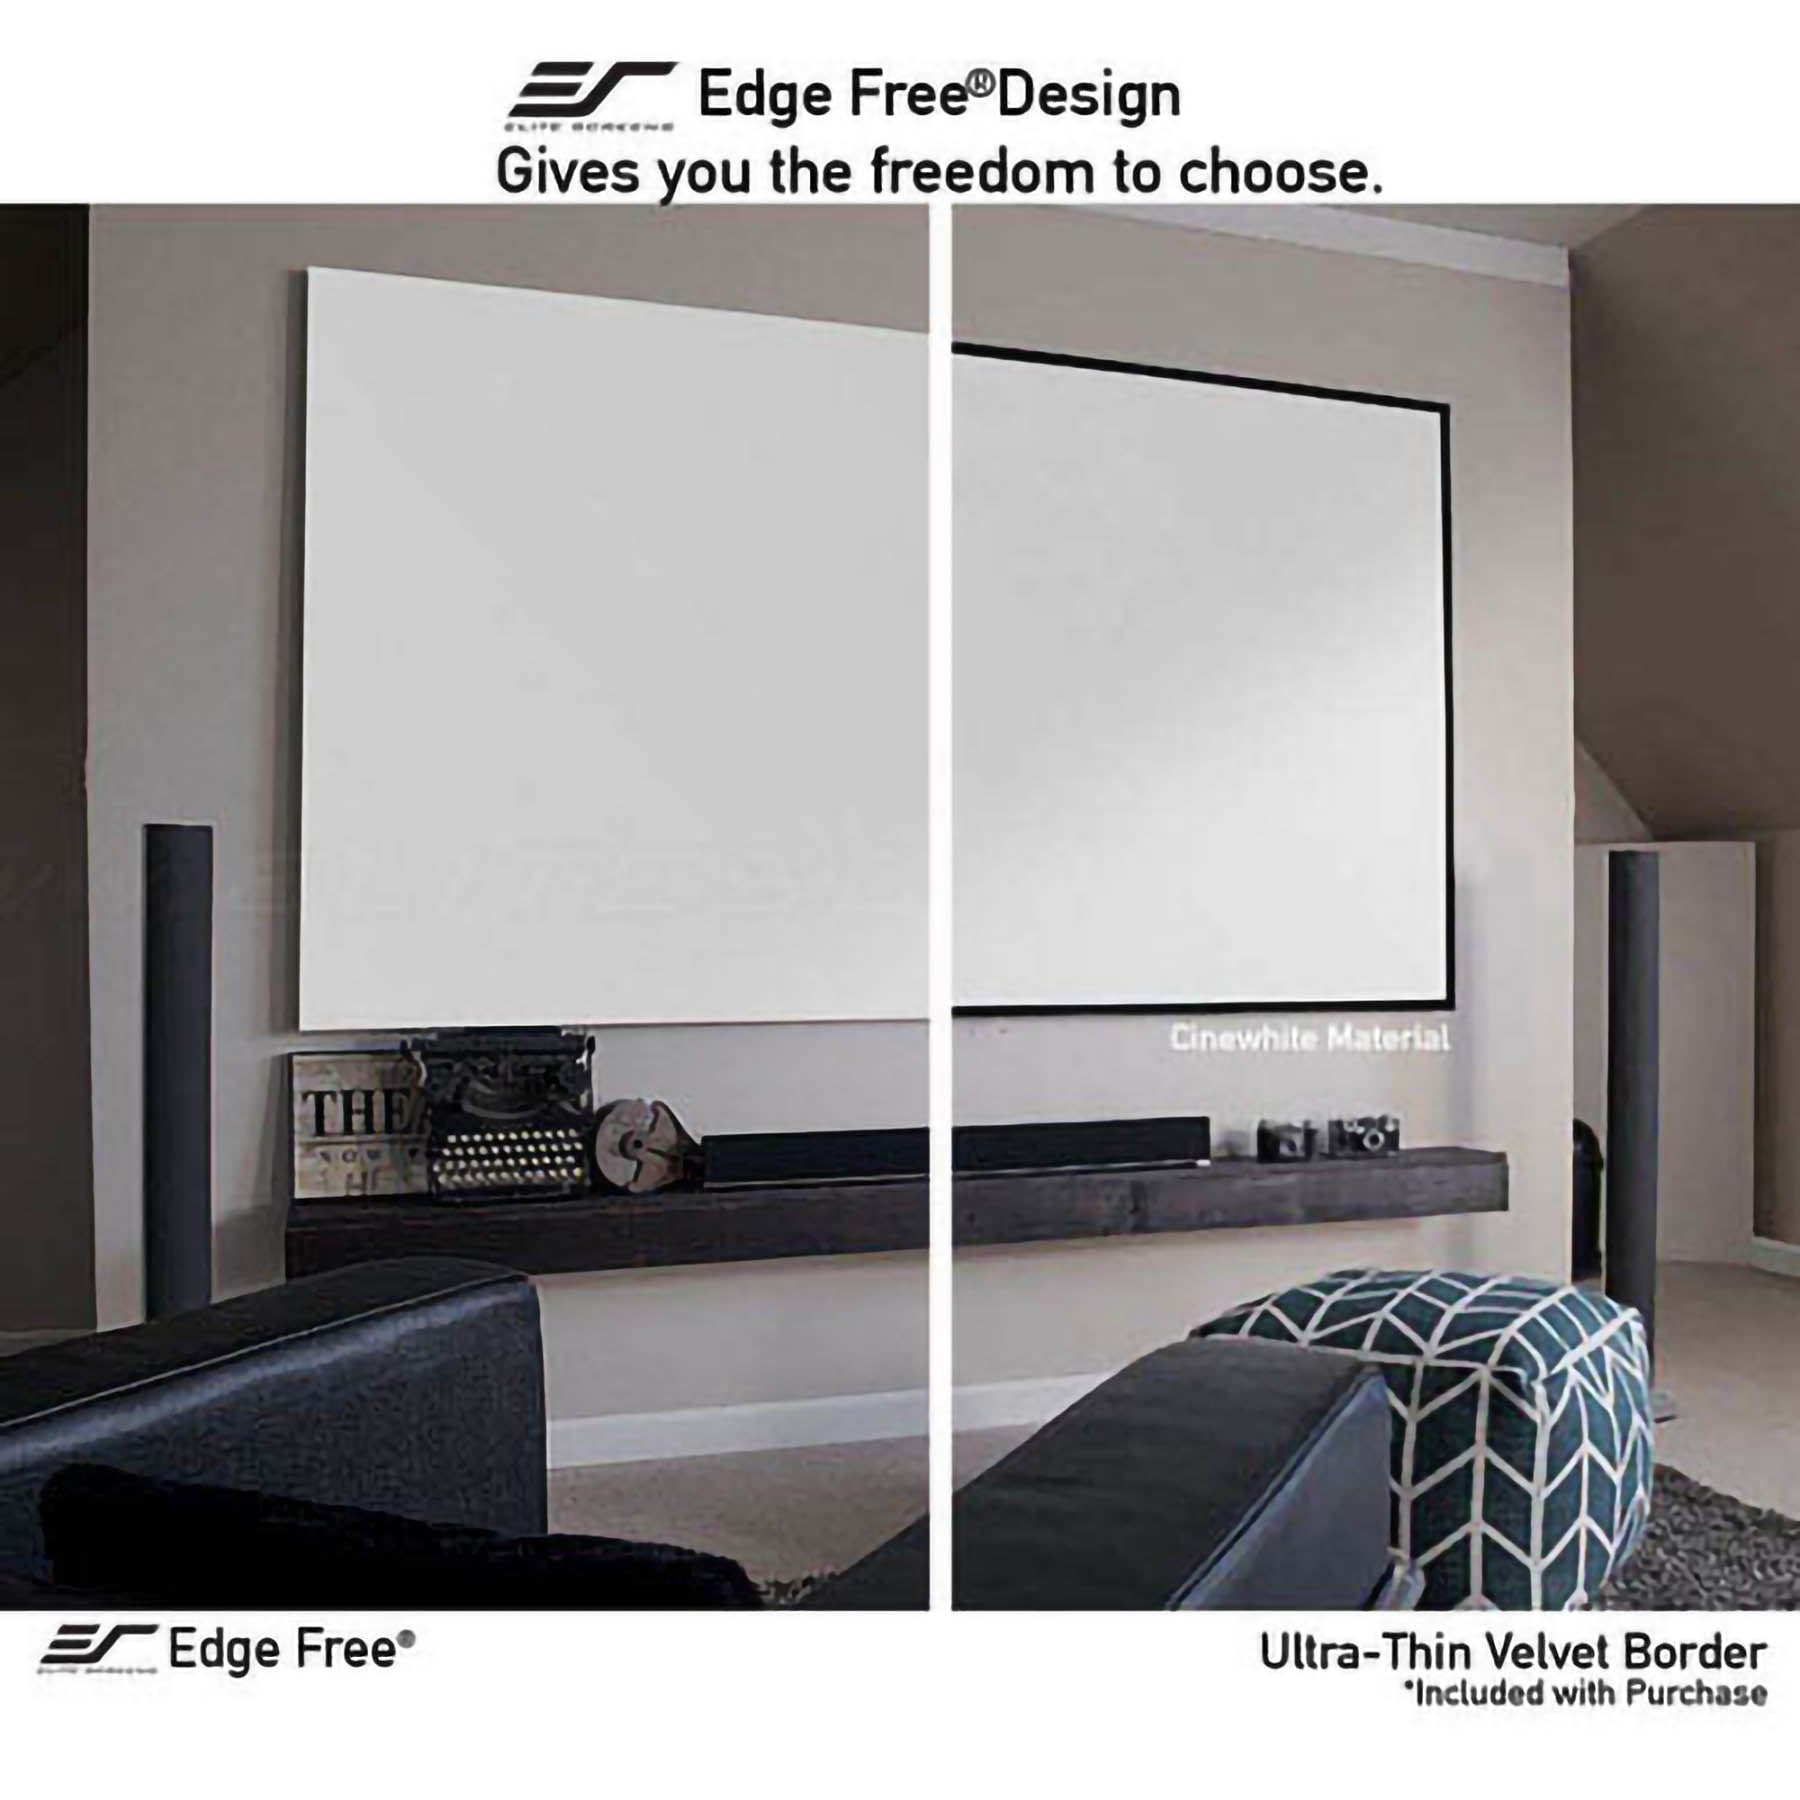 Elite Screens AR135WH2 Aeon Series 135" 16:9 4K Fixed Screen with EDGE FREE Frame